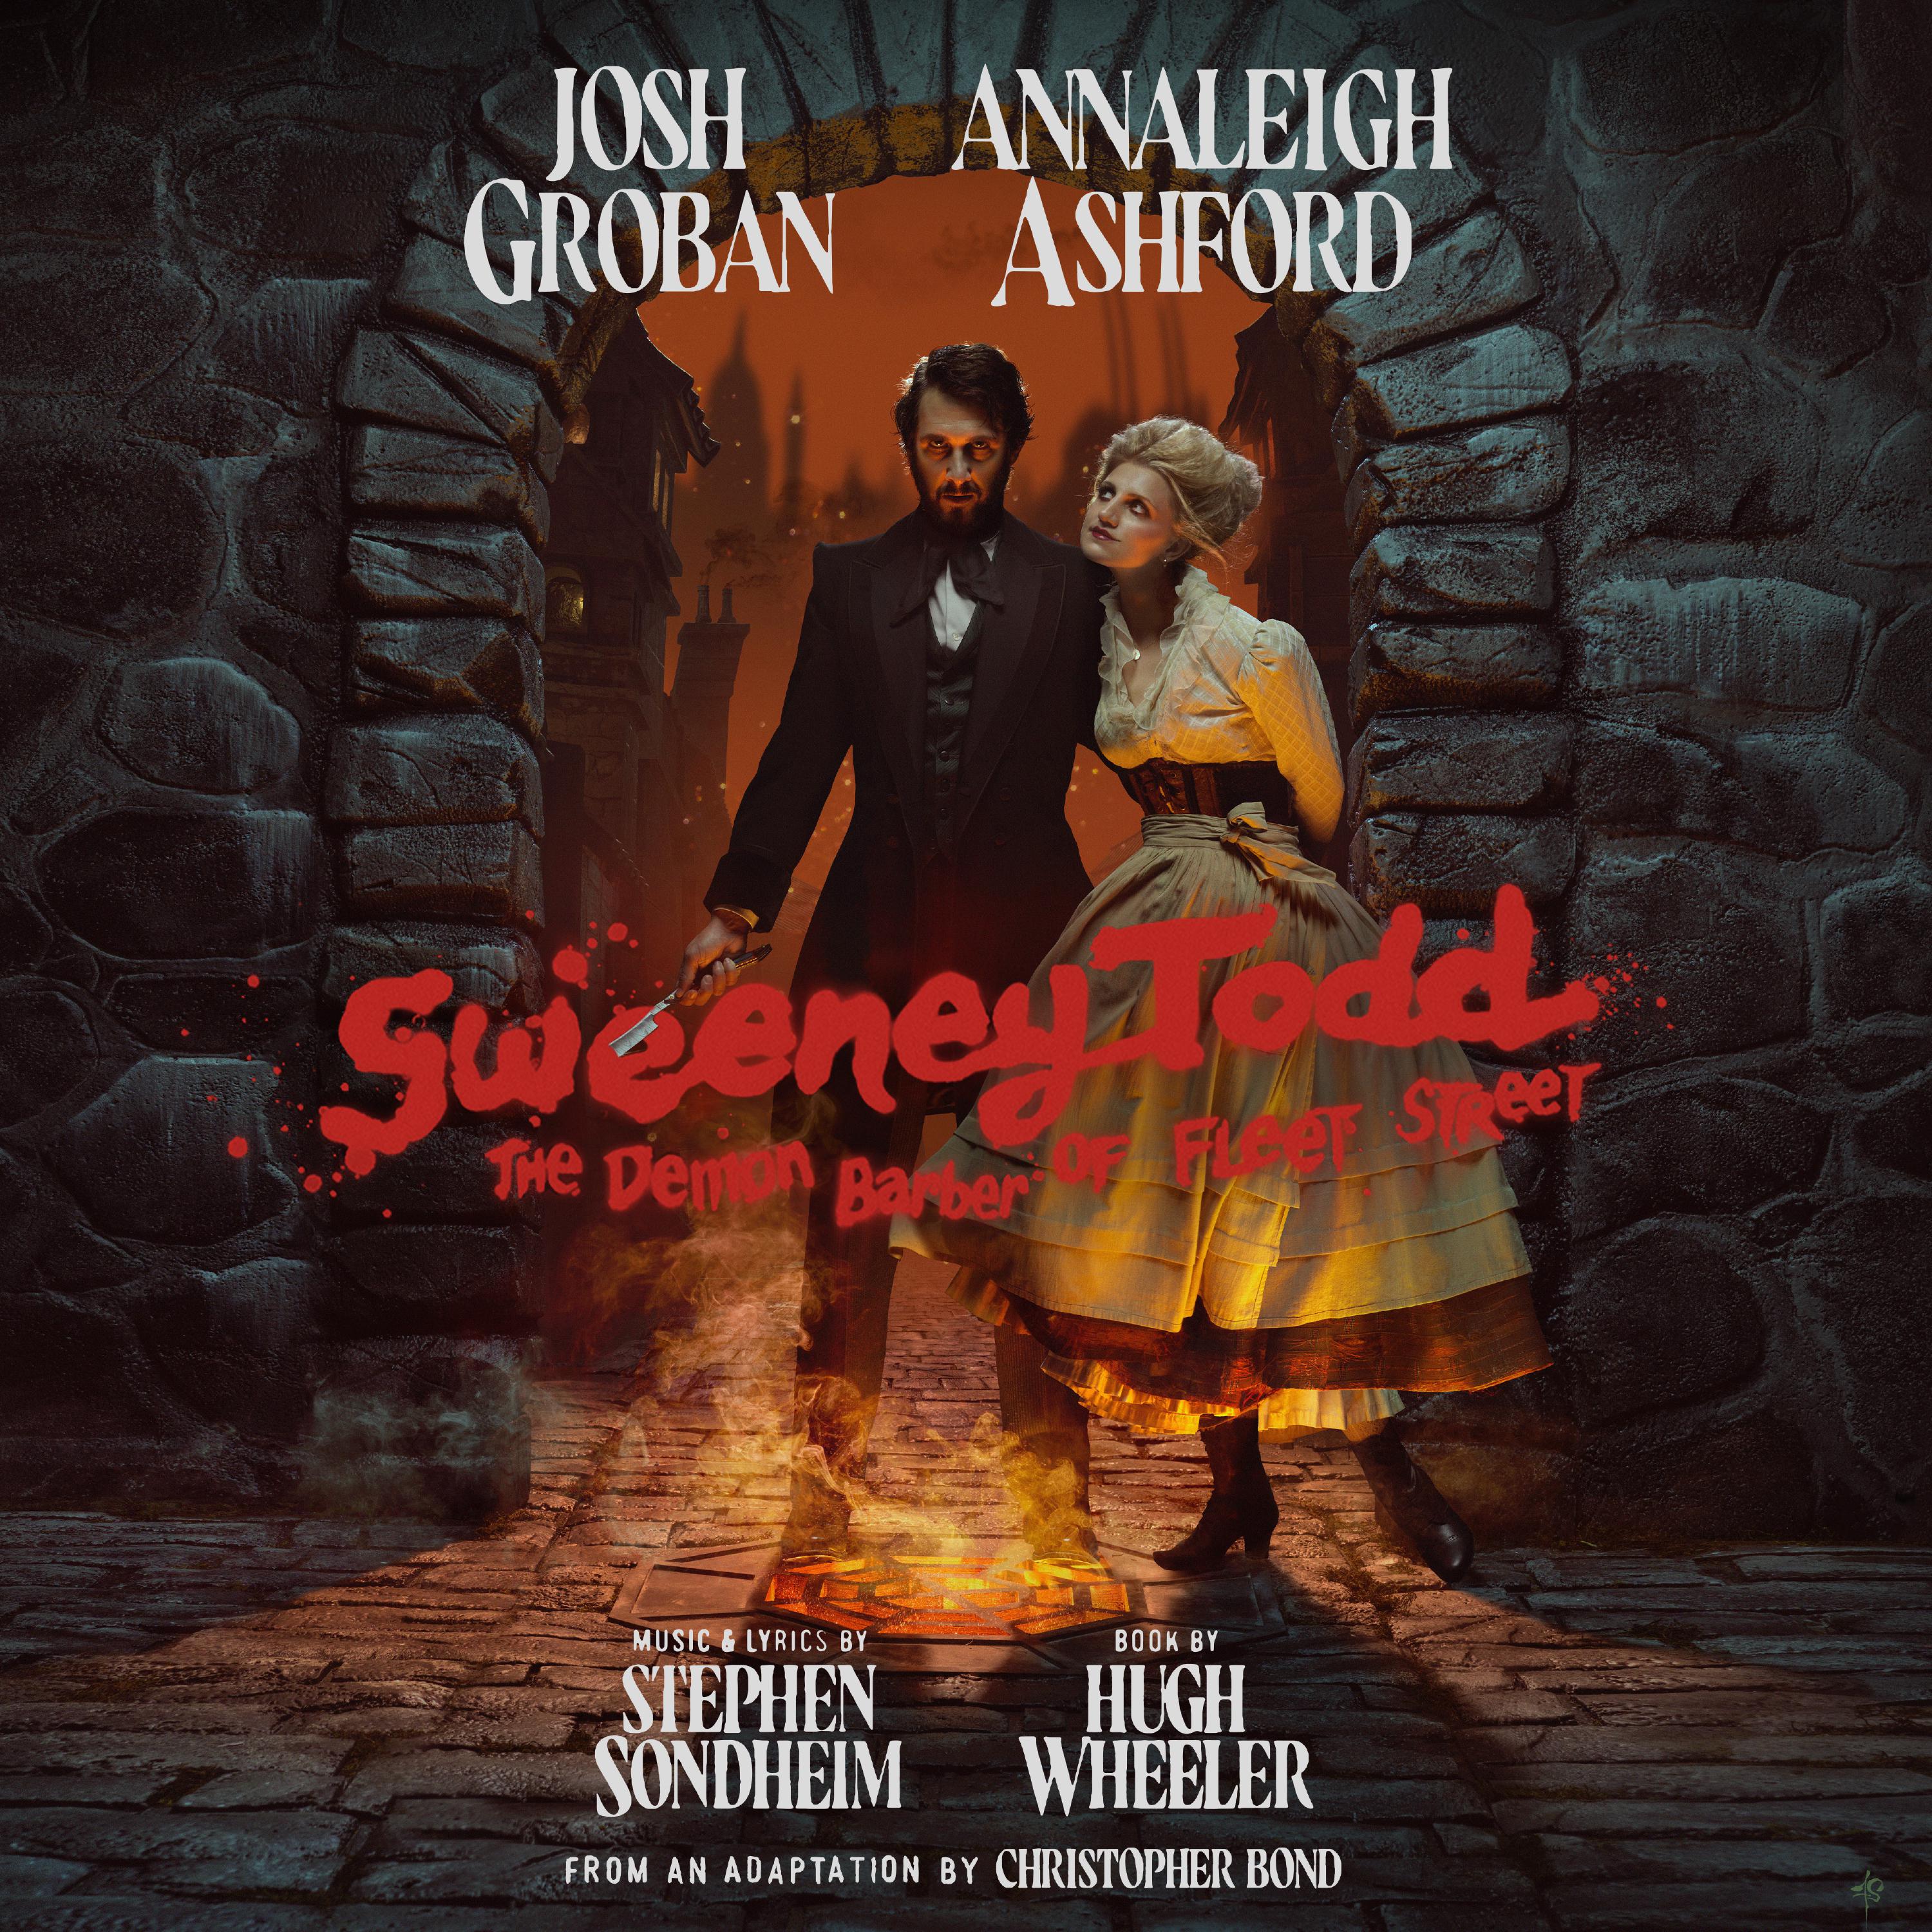 Josh Groban - Johanna (Act 2 Sequence)